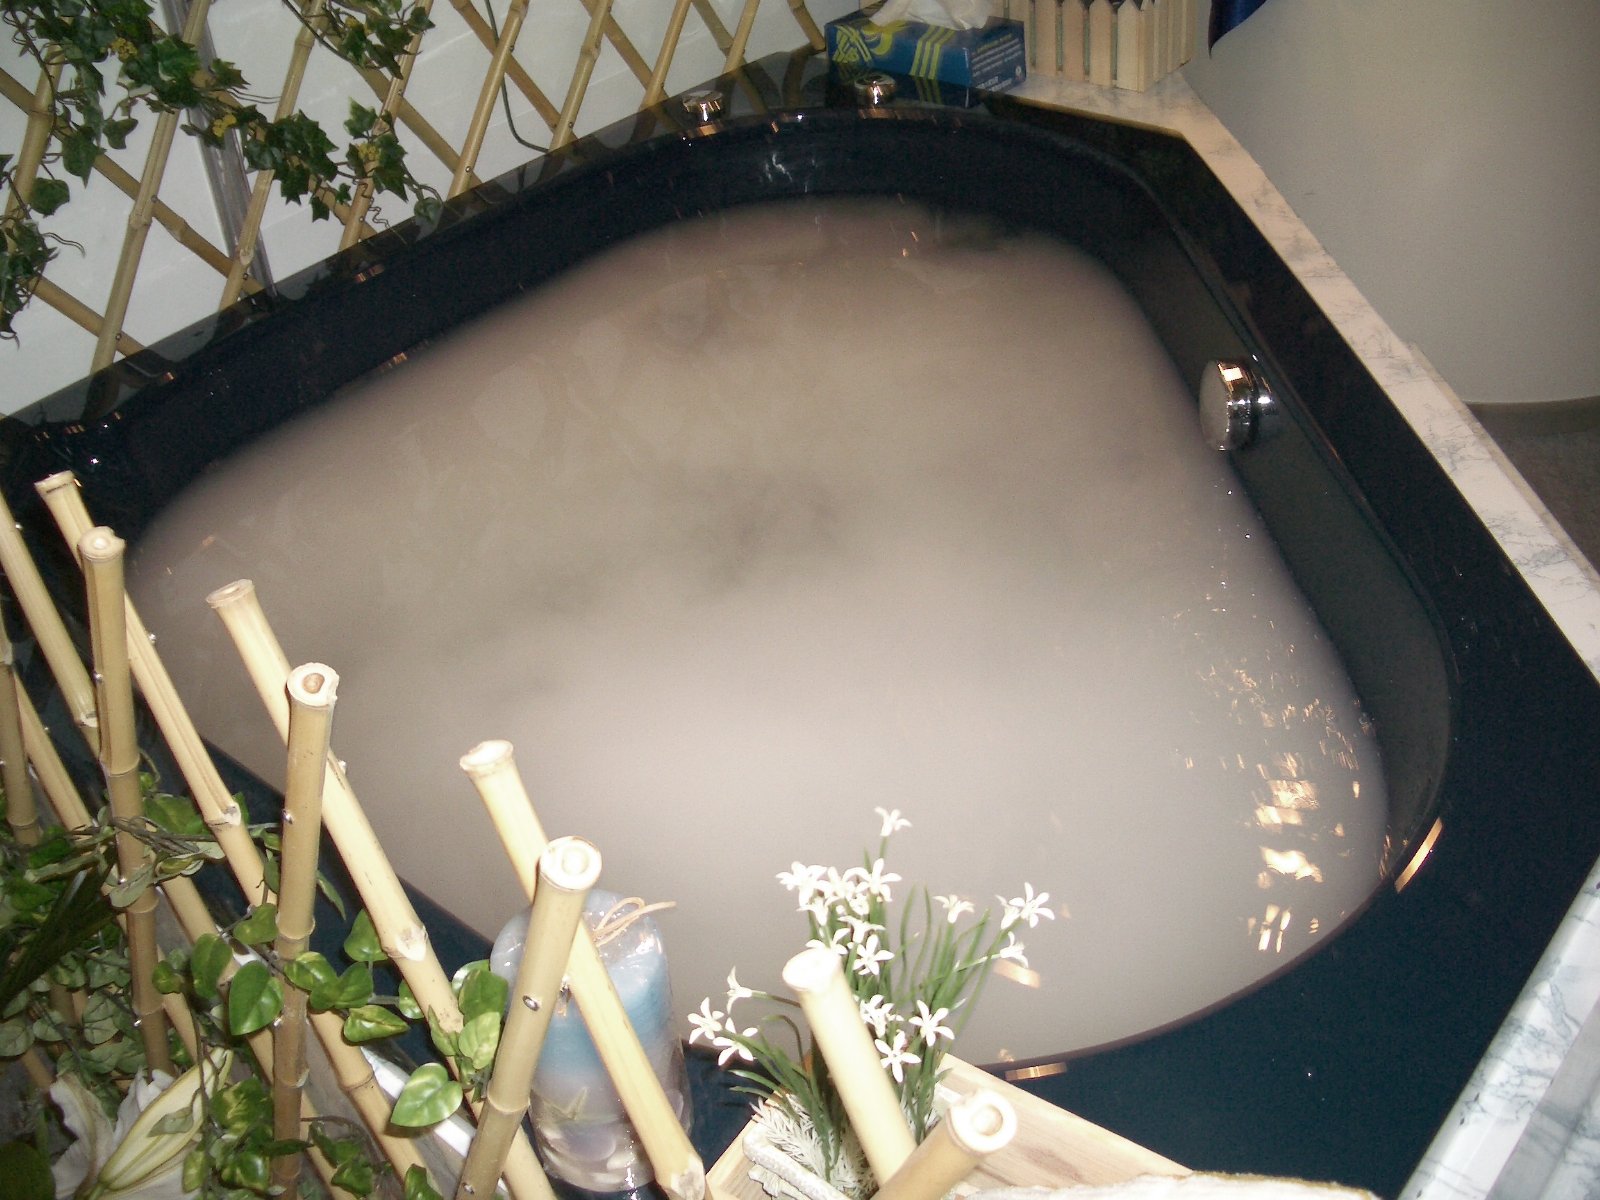 Cashido Queen Bath (Cashido Королева ванной)